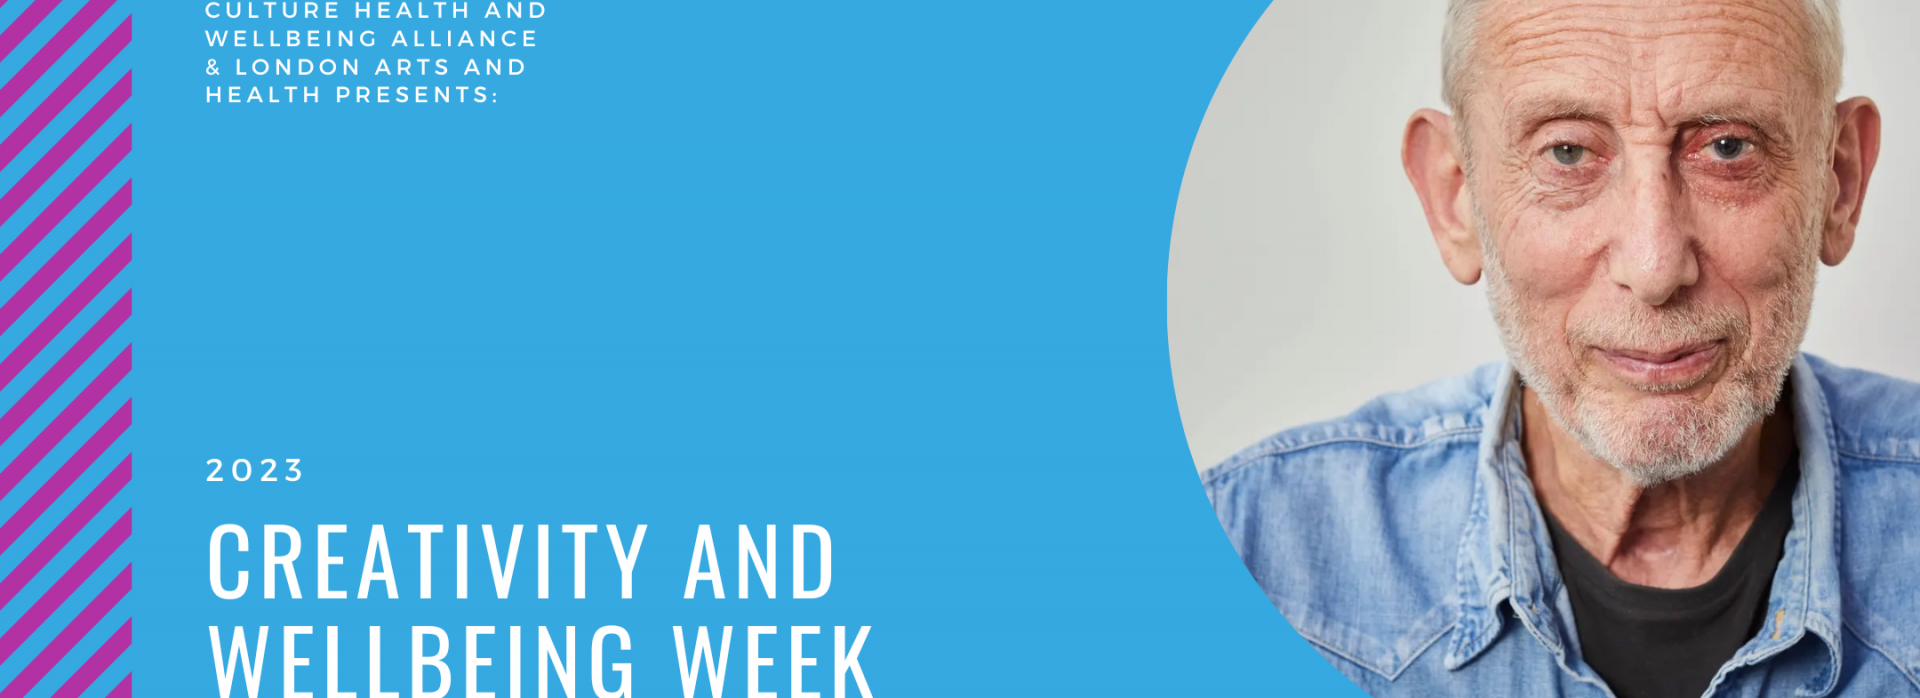 Creativity & Wellbeing Week banner featuring a portrait of Michael Rosen